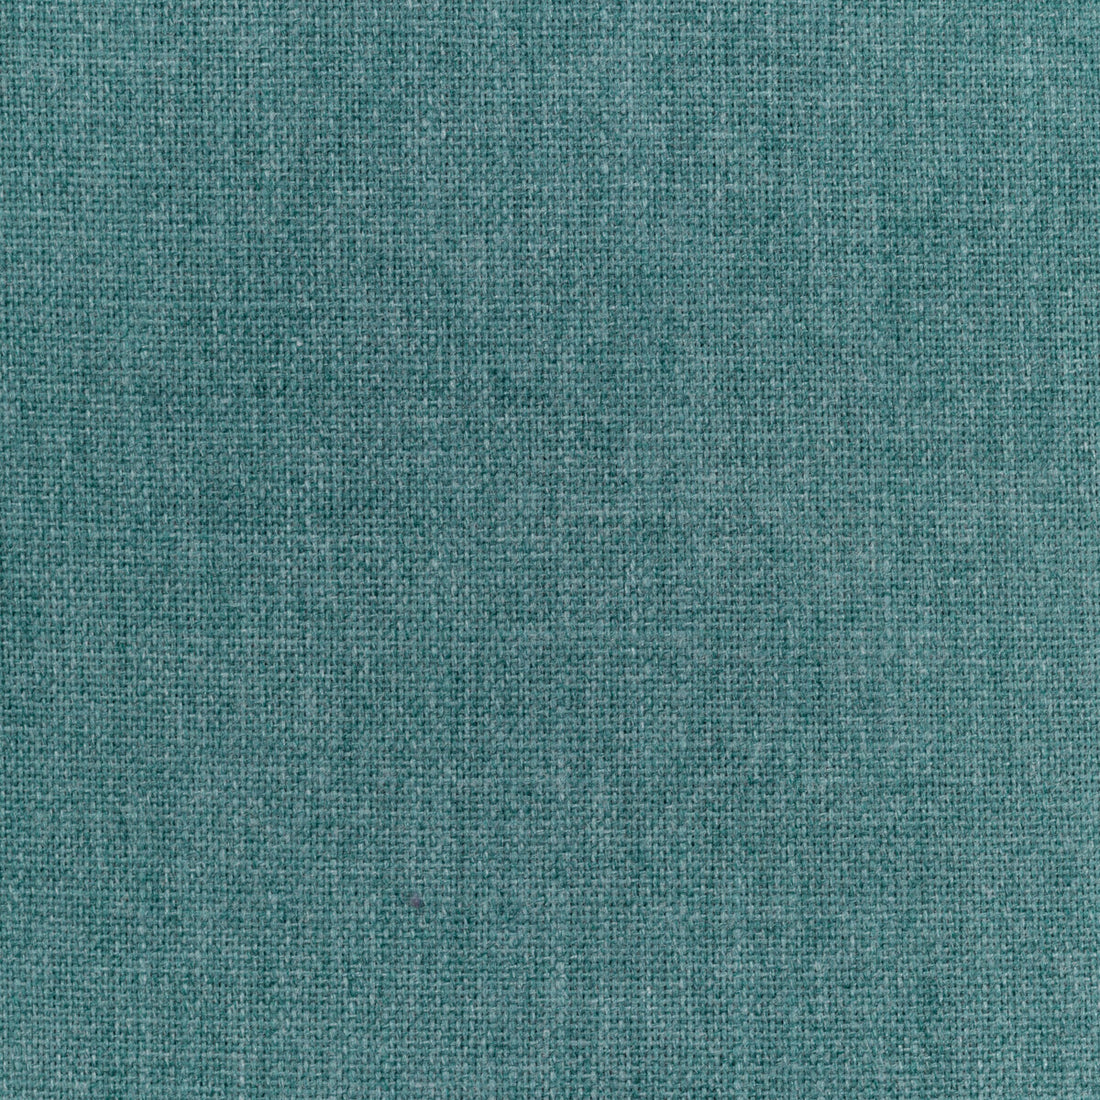 Kravet Smart fabric in 36112-313 color - pattern 36112.313.0 - by Kravet Smart in the Performance Kravetarmor collection